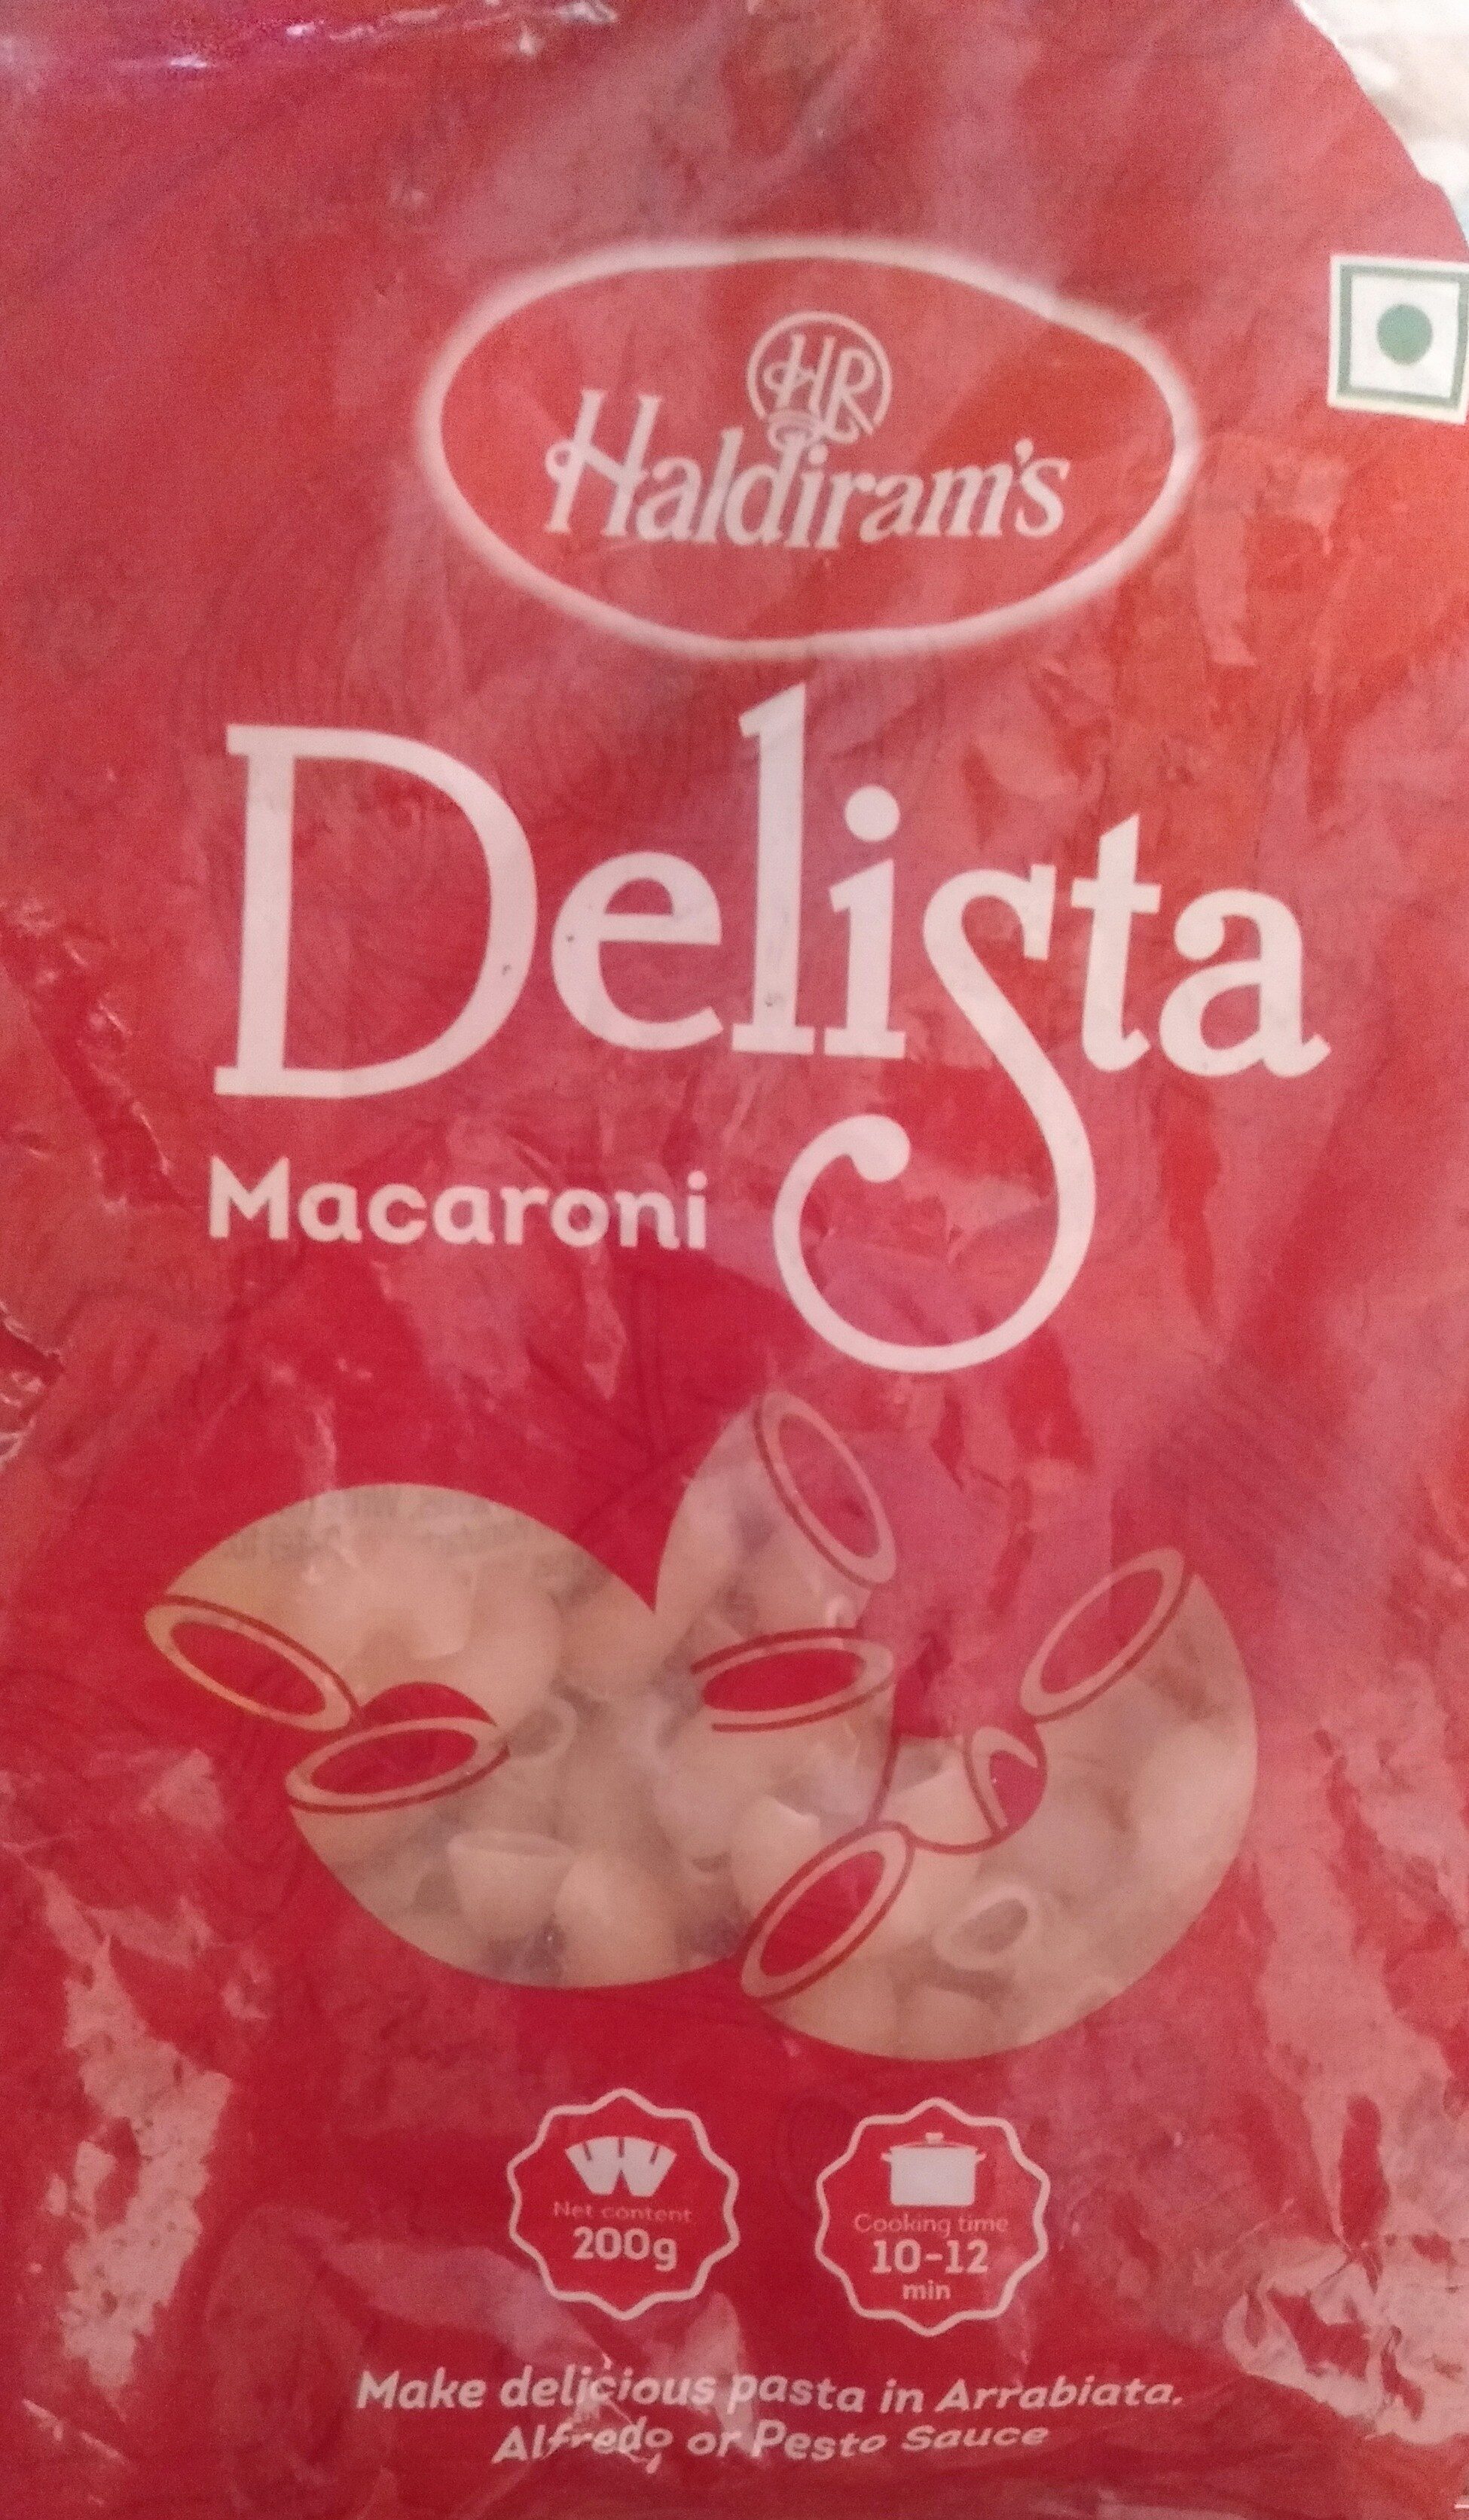 Delista macaroni - Product